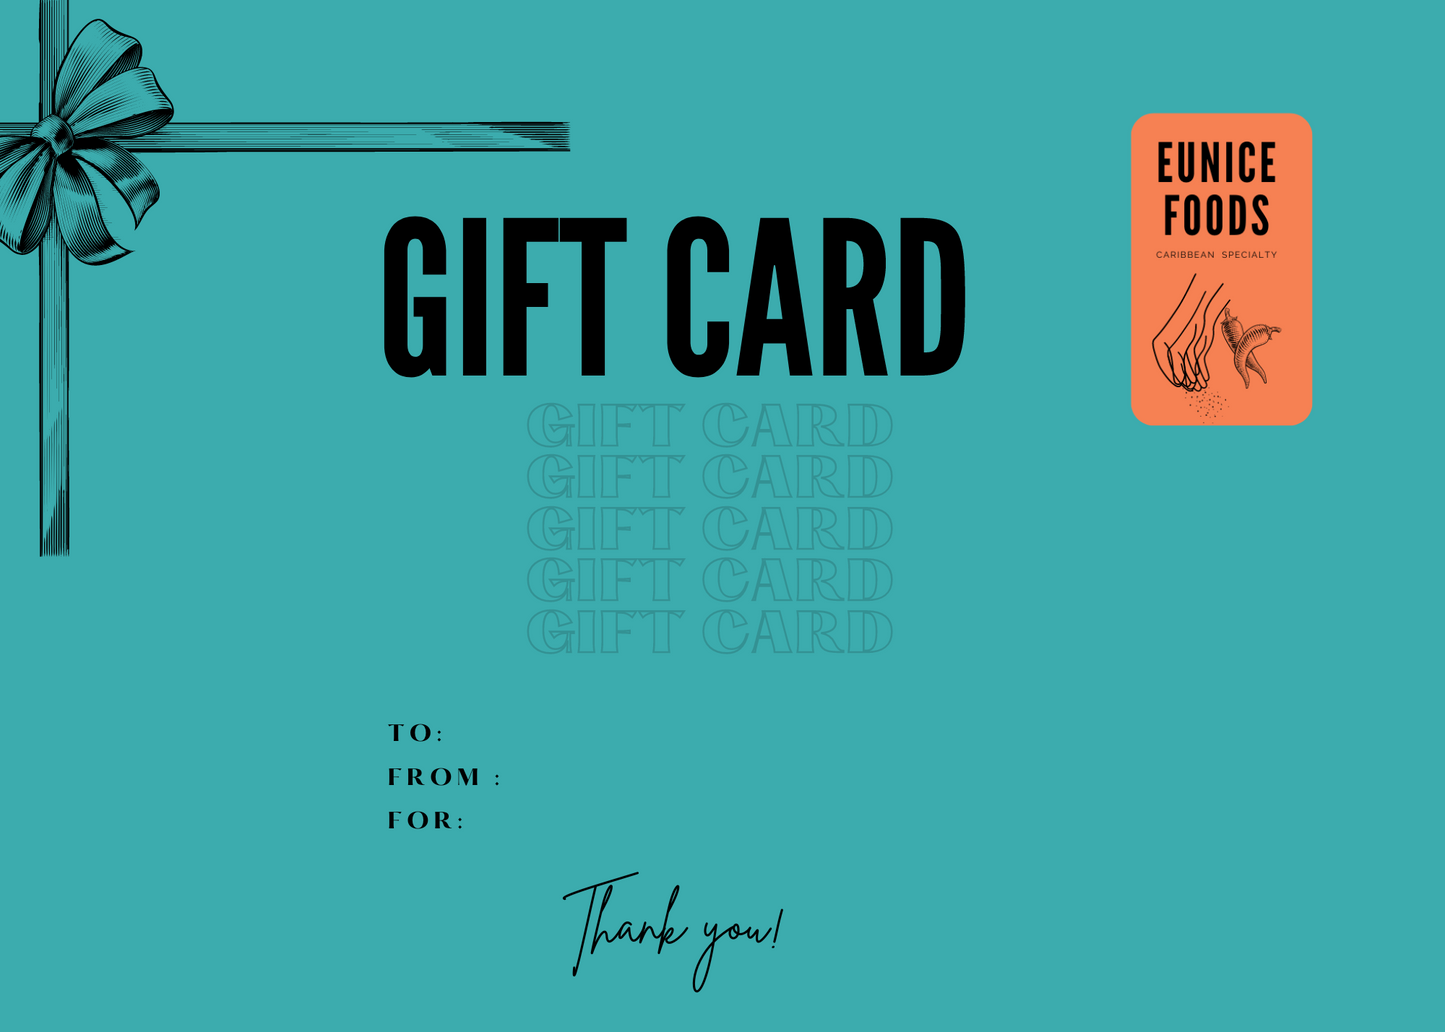 Eunice Foods Virtual Gift Card